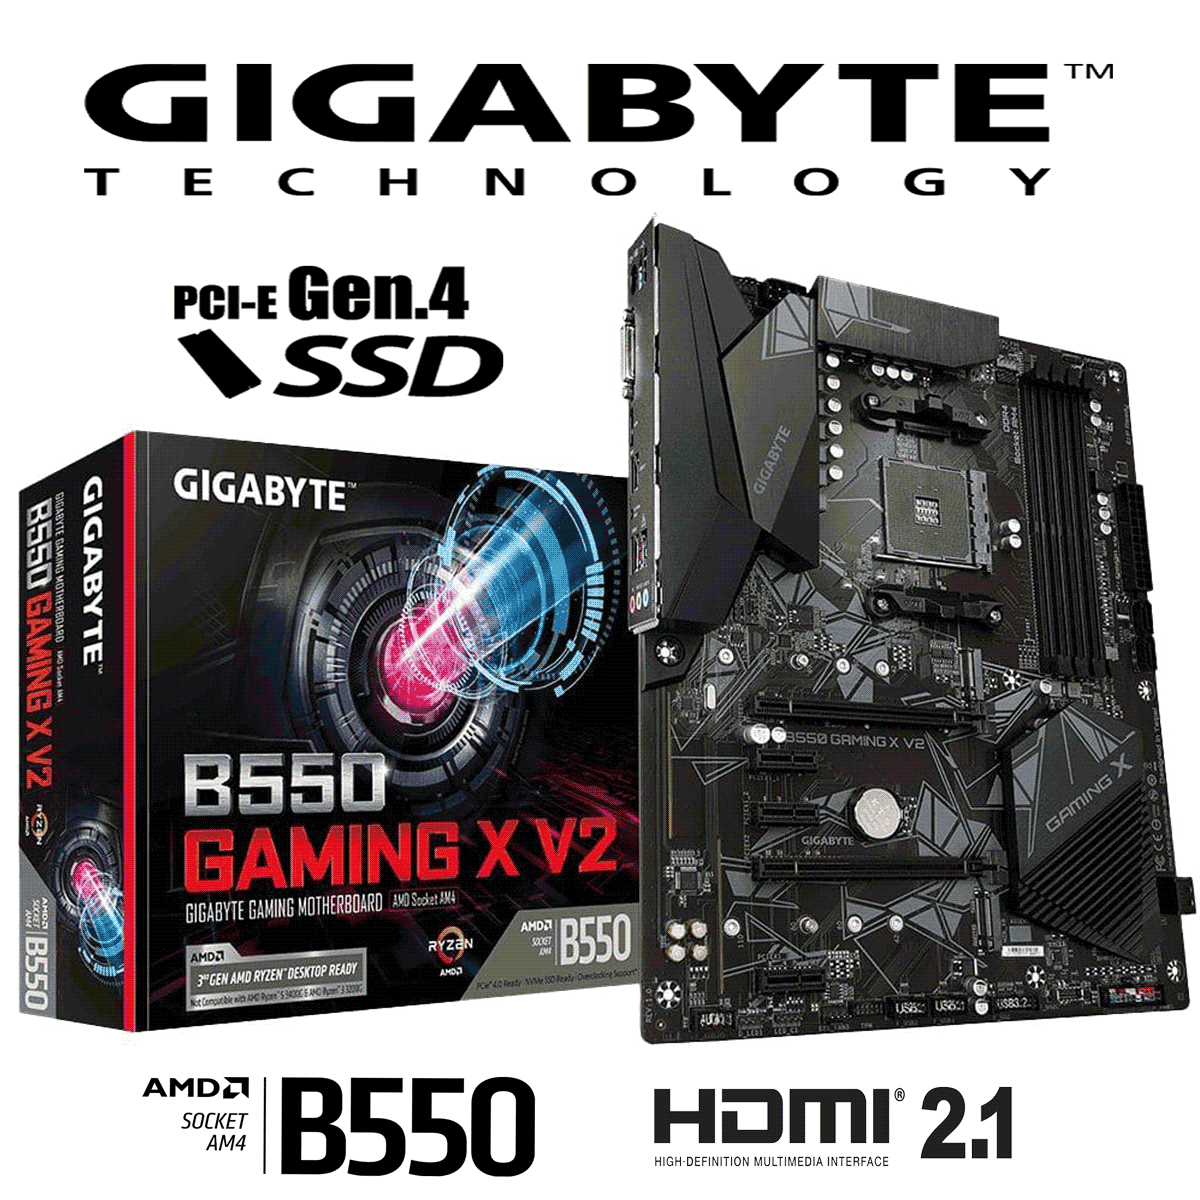 PC Bundle • AMD Ryzen 7 5700G • GIGABYTE B550 Gaming X V2 • 16GB DDR4-3200 Ram